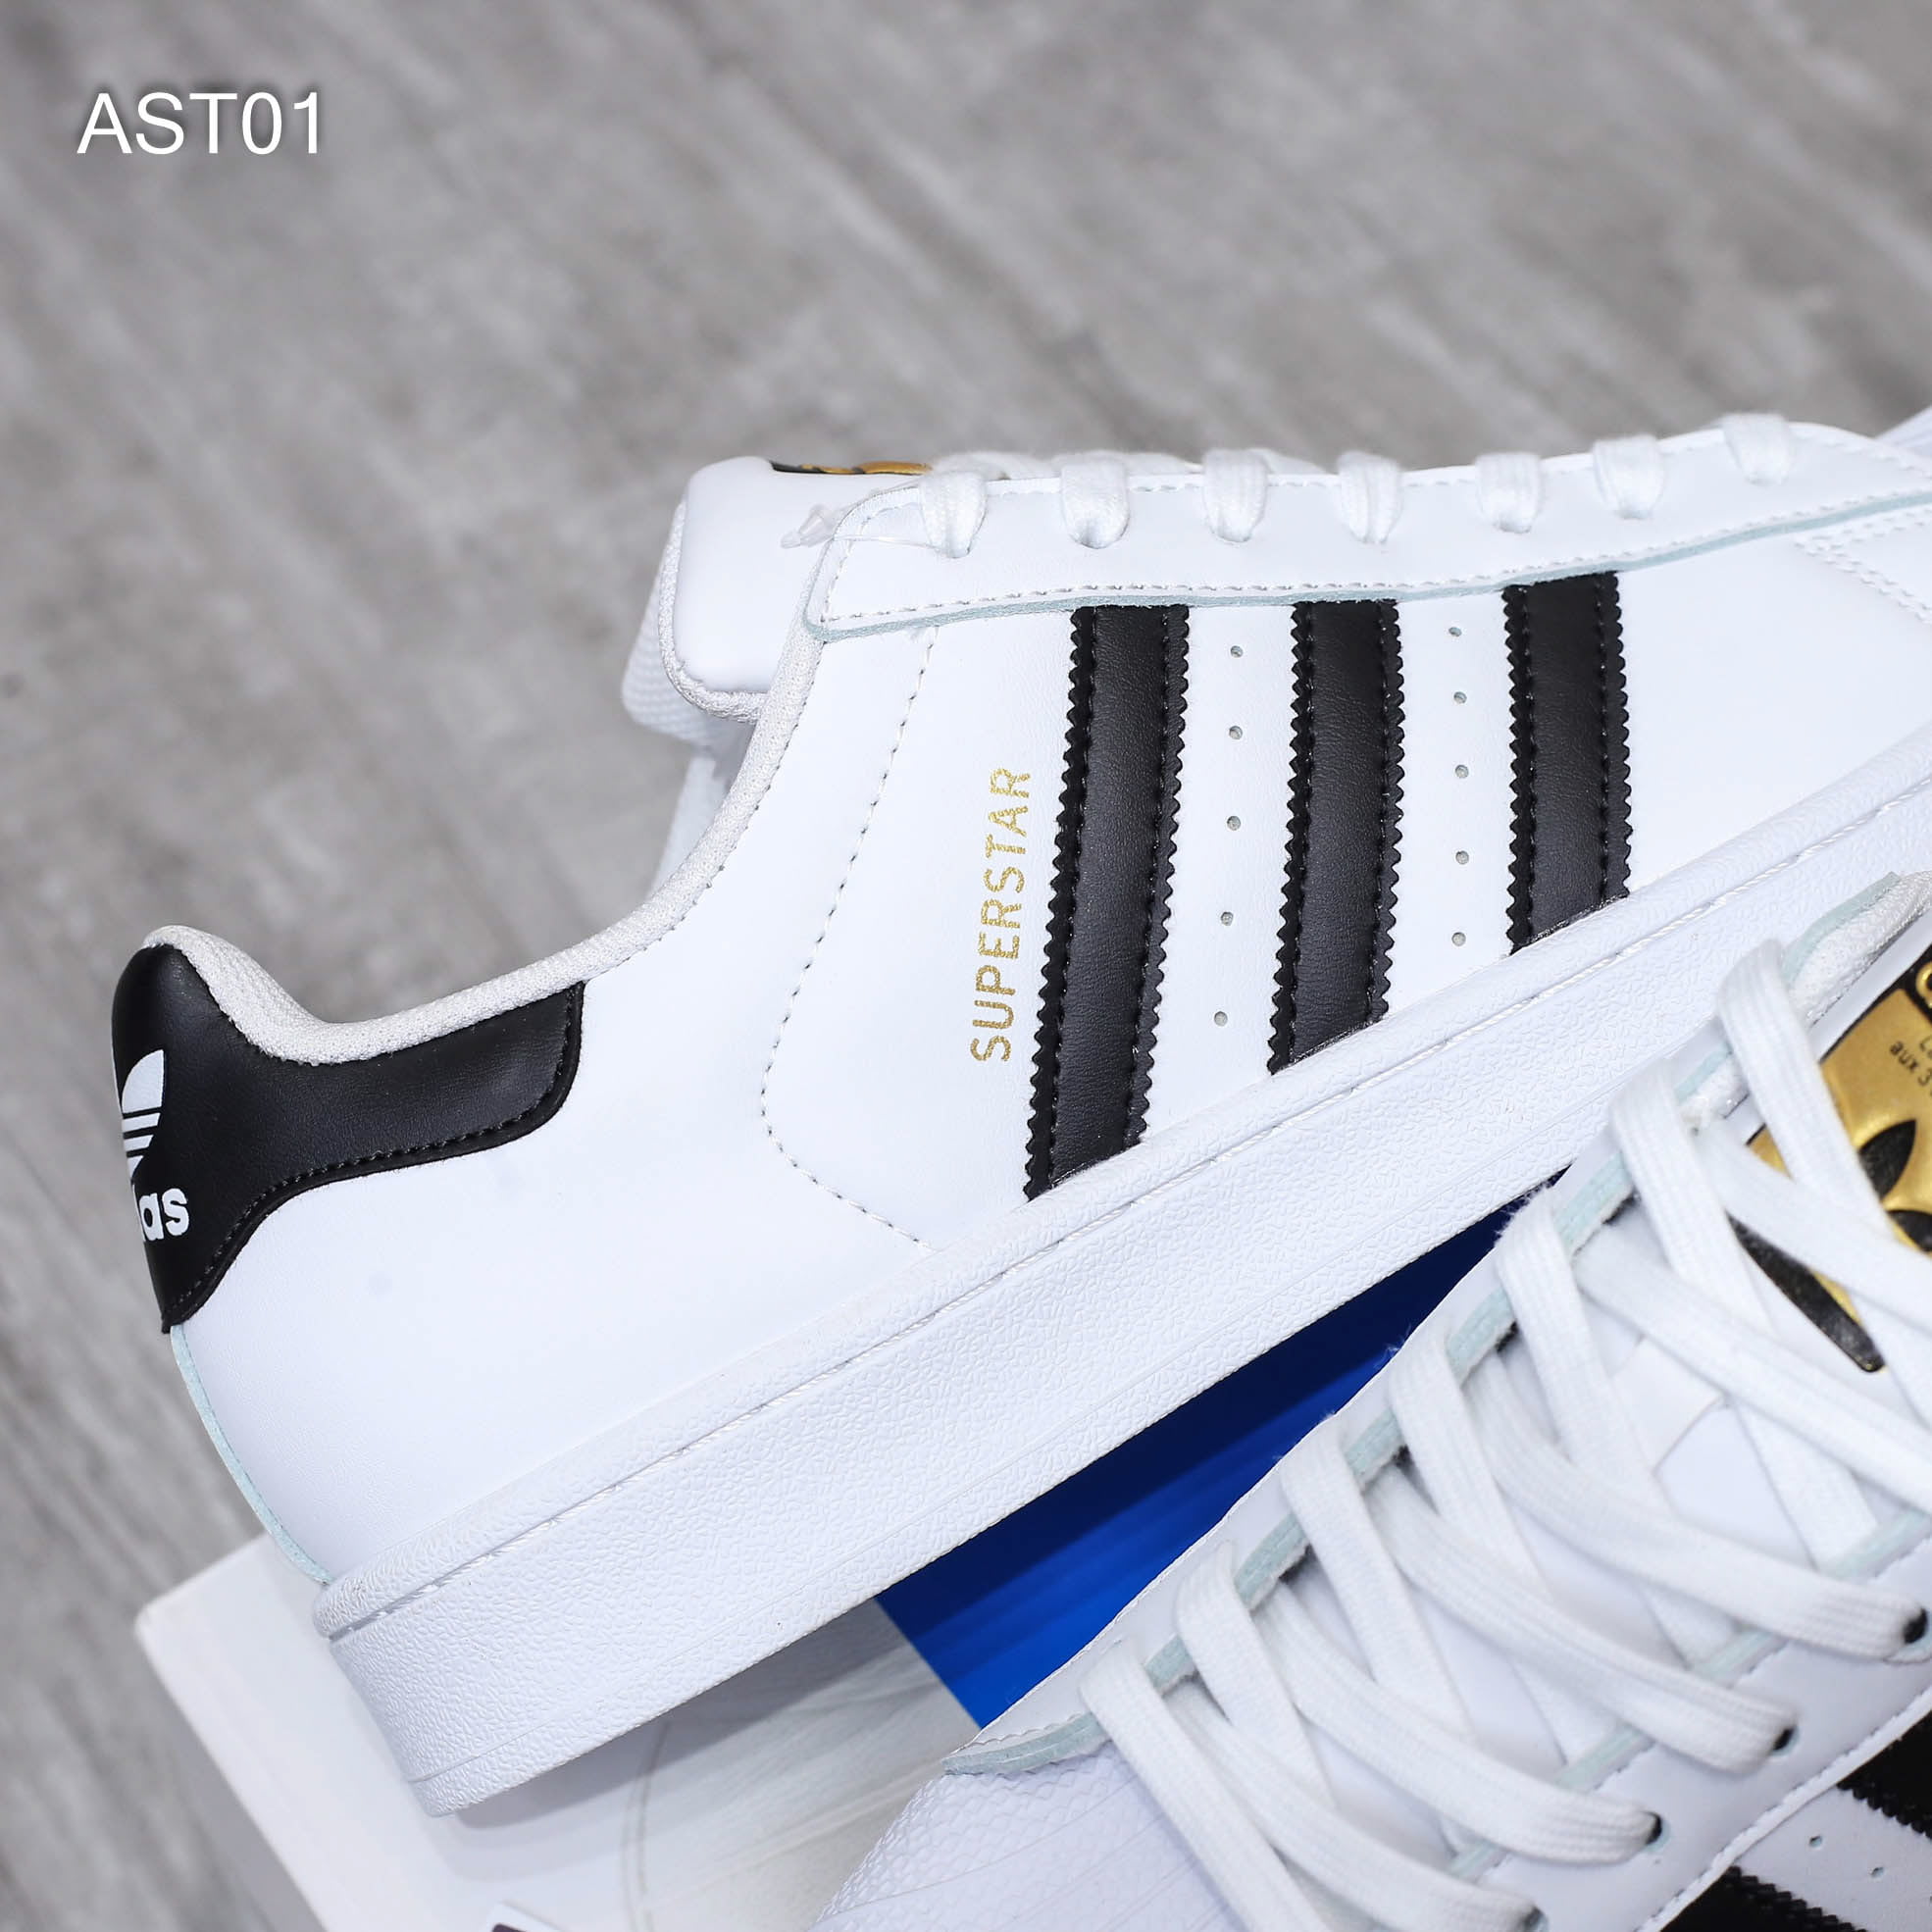 Giày Adidas Superstar trắng sọc đen